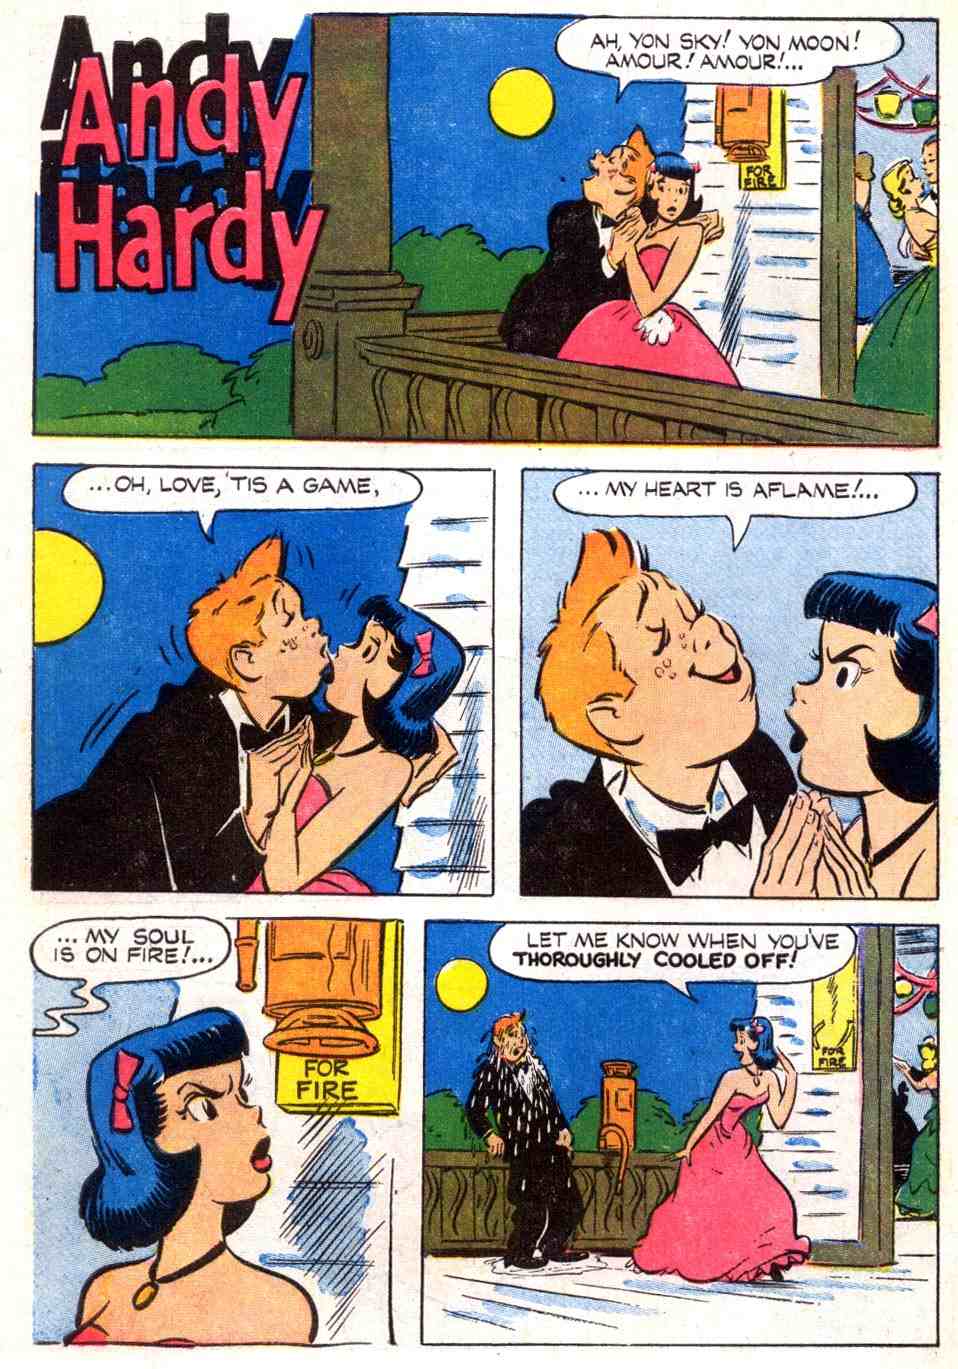 Andy-Hardy-Comic-Strips (34)